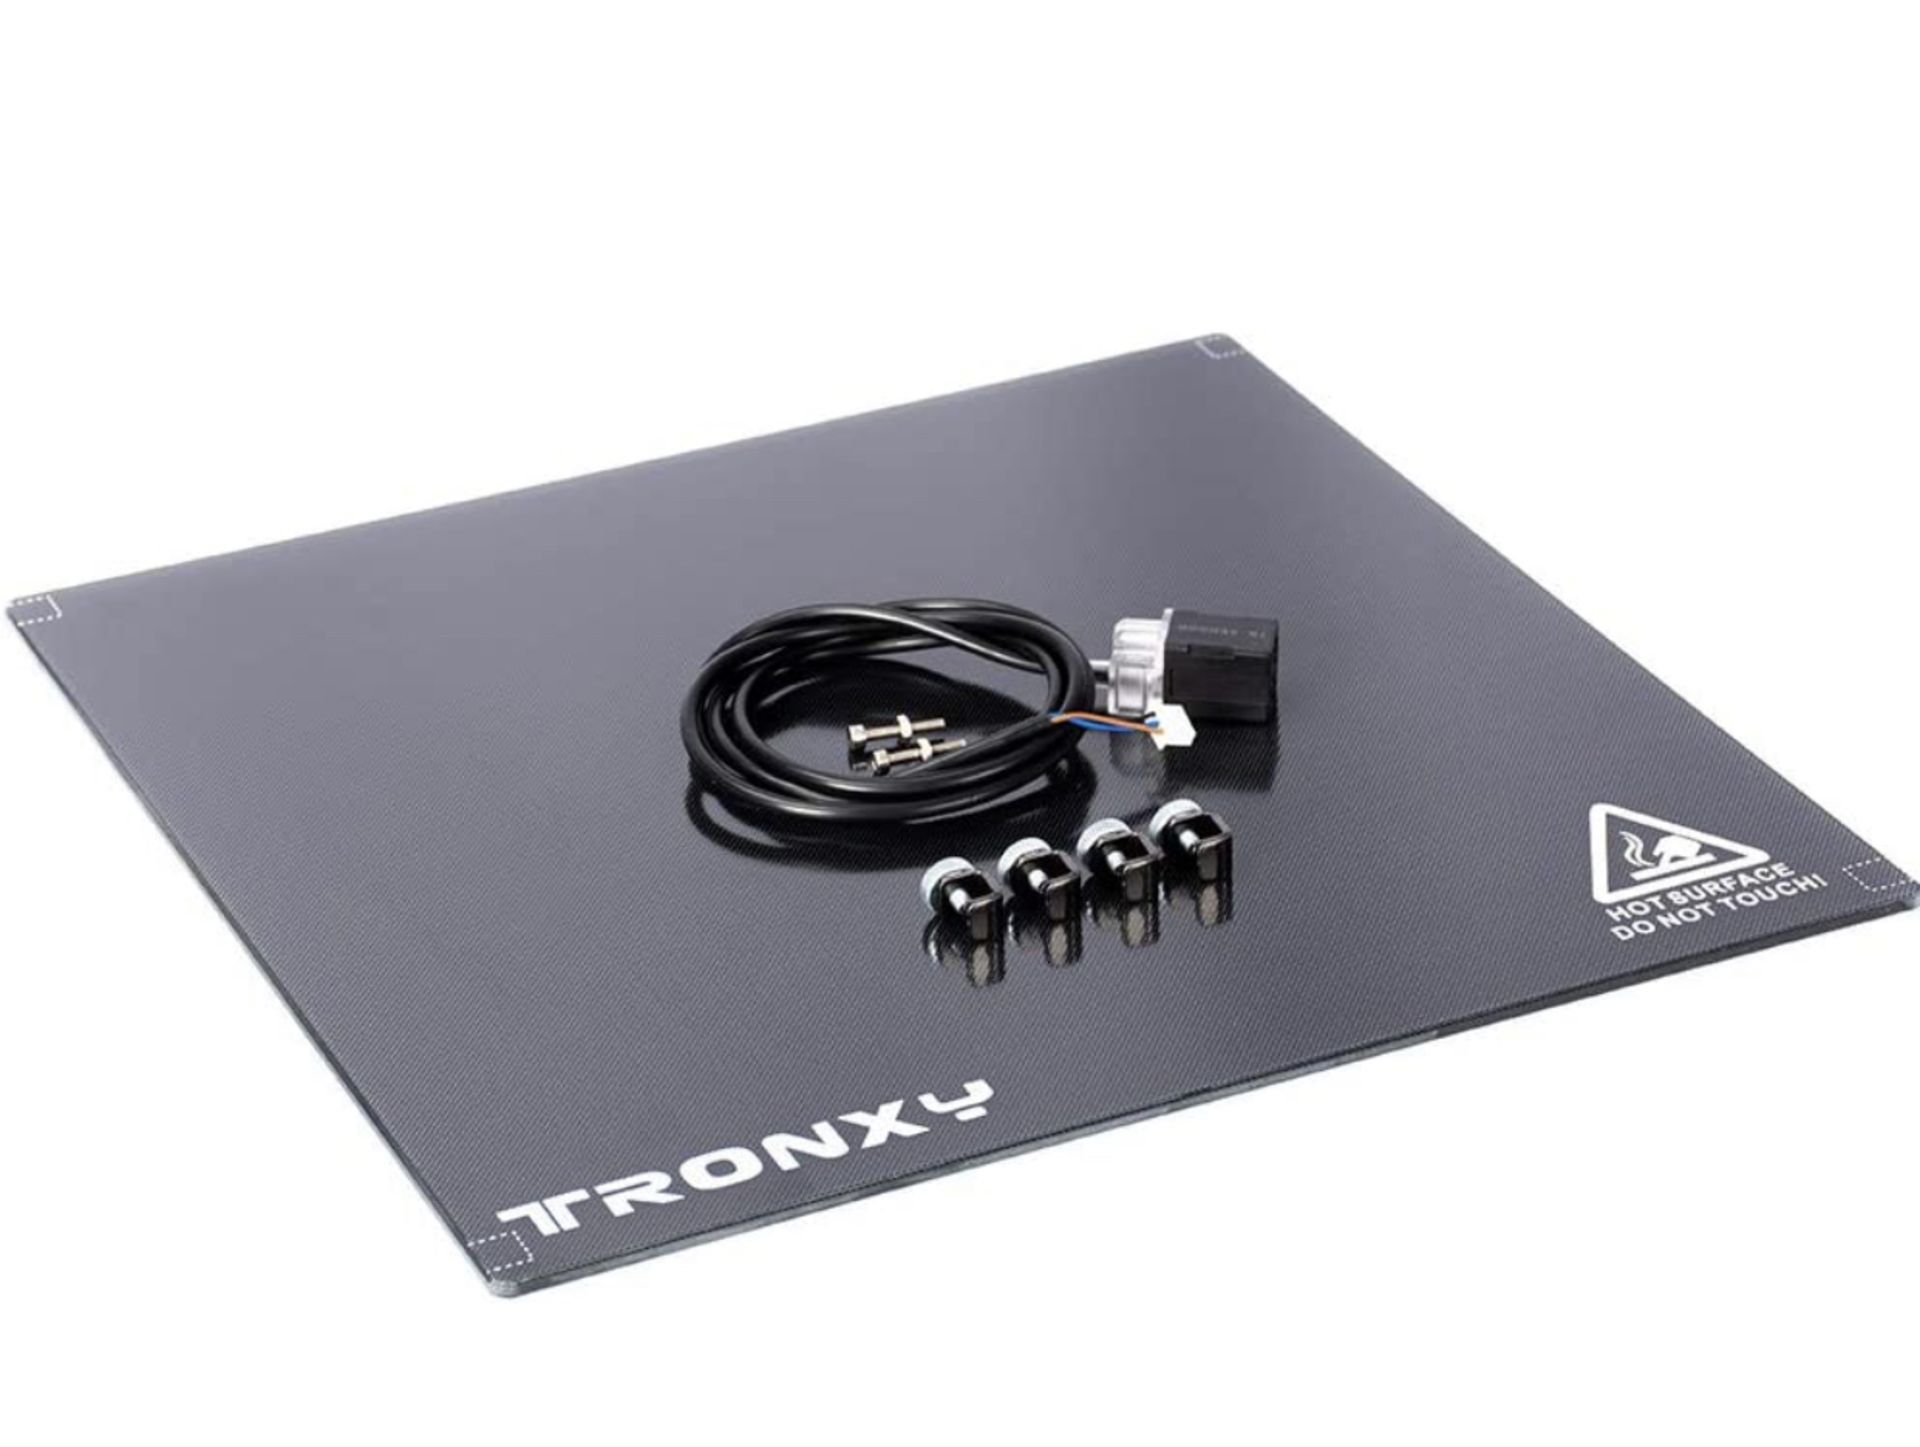 Tronxy Upgraded 3D Printer Platform 330x330mm RRP £49.99